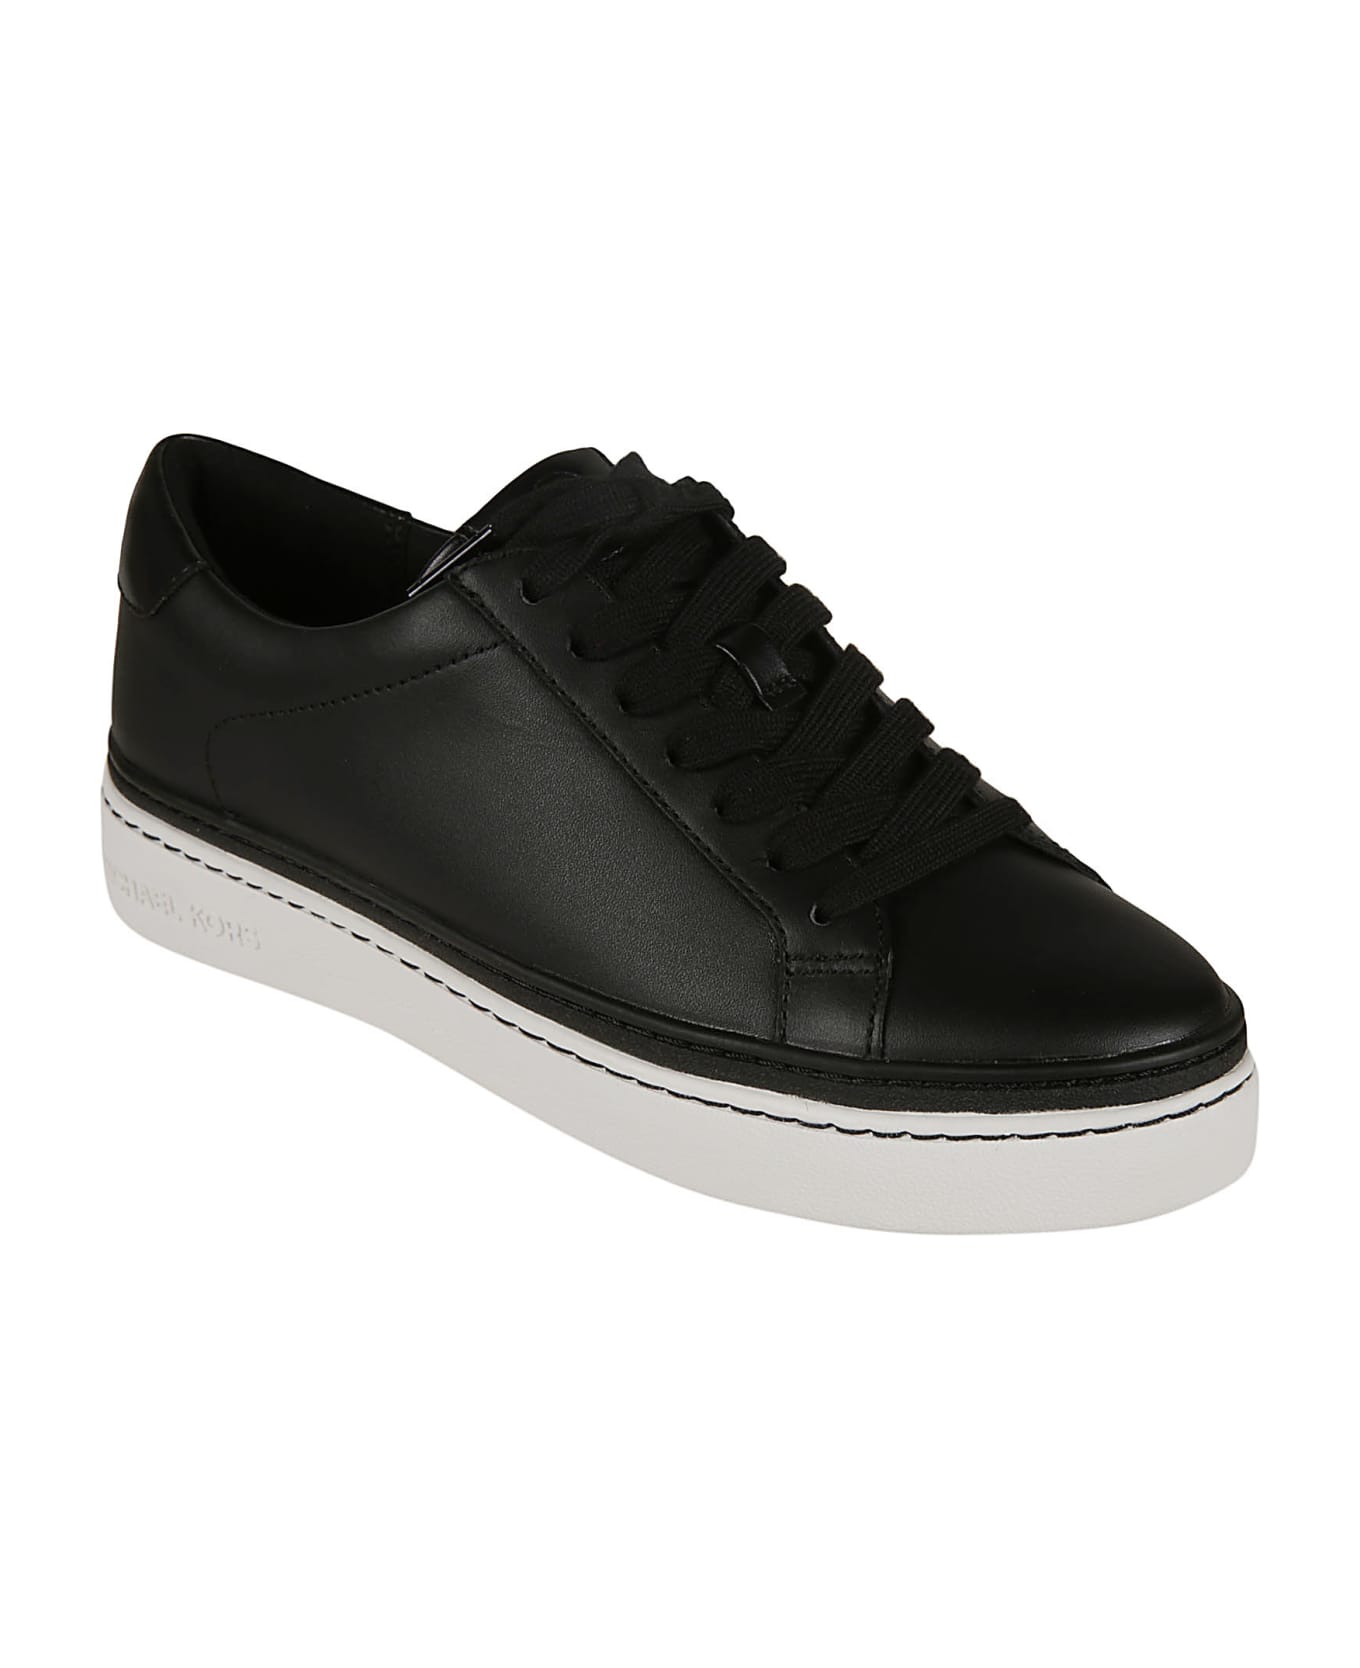 Michael Kors Chapman Lace-up Sneakers - Black